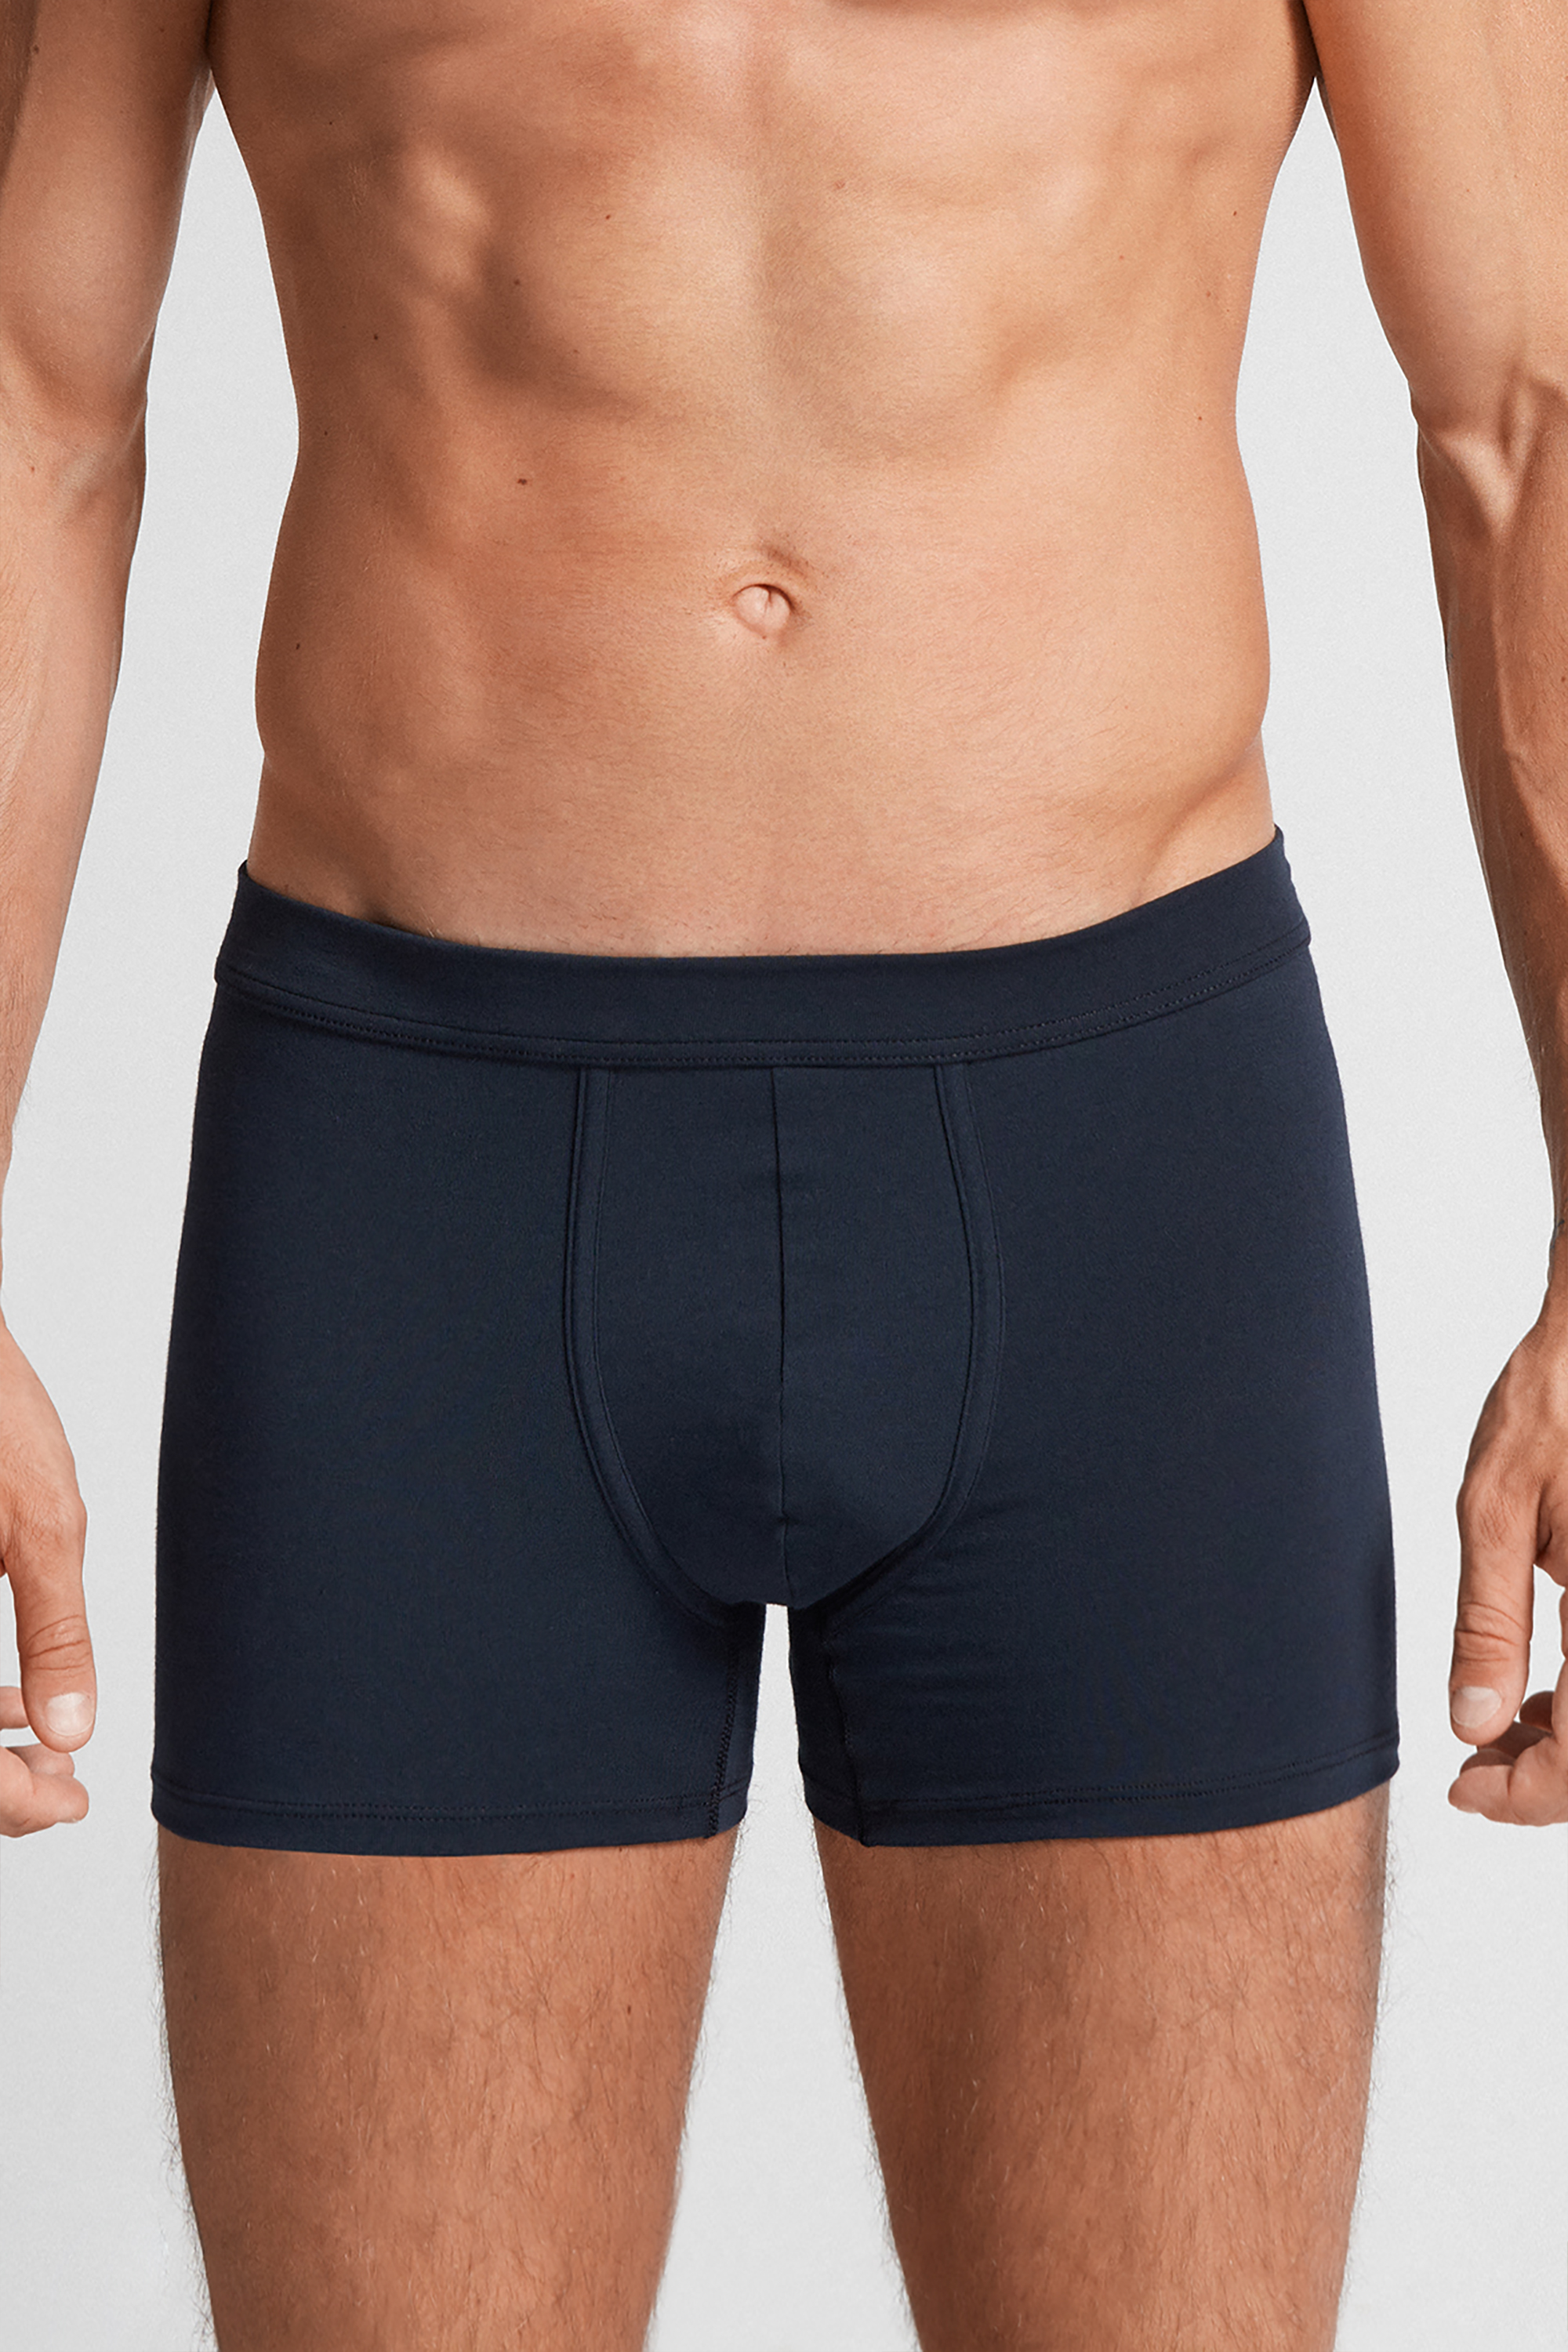 US Men's Silky Long Sheath Sleeve Boxer Briefs Shorts Trunks Lingerie  Underwear